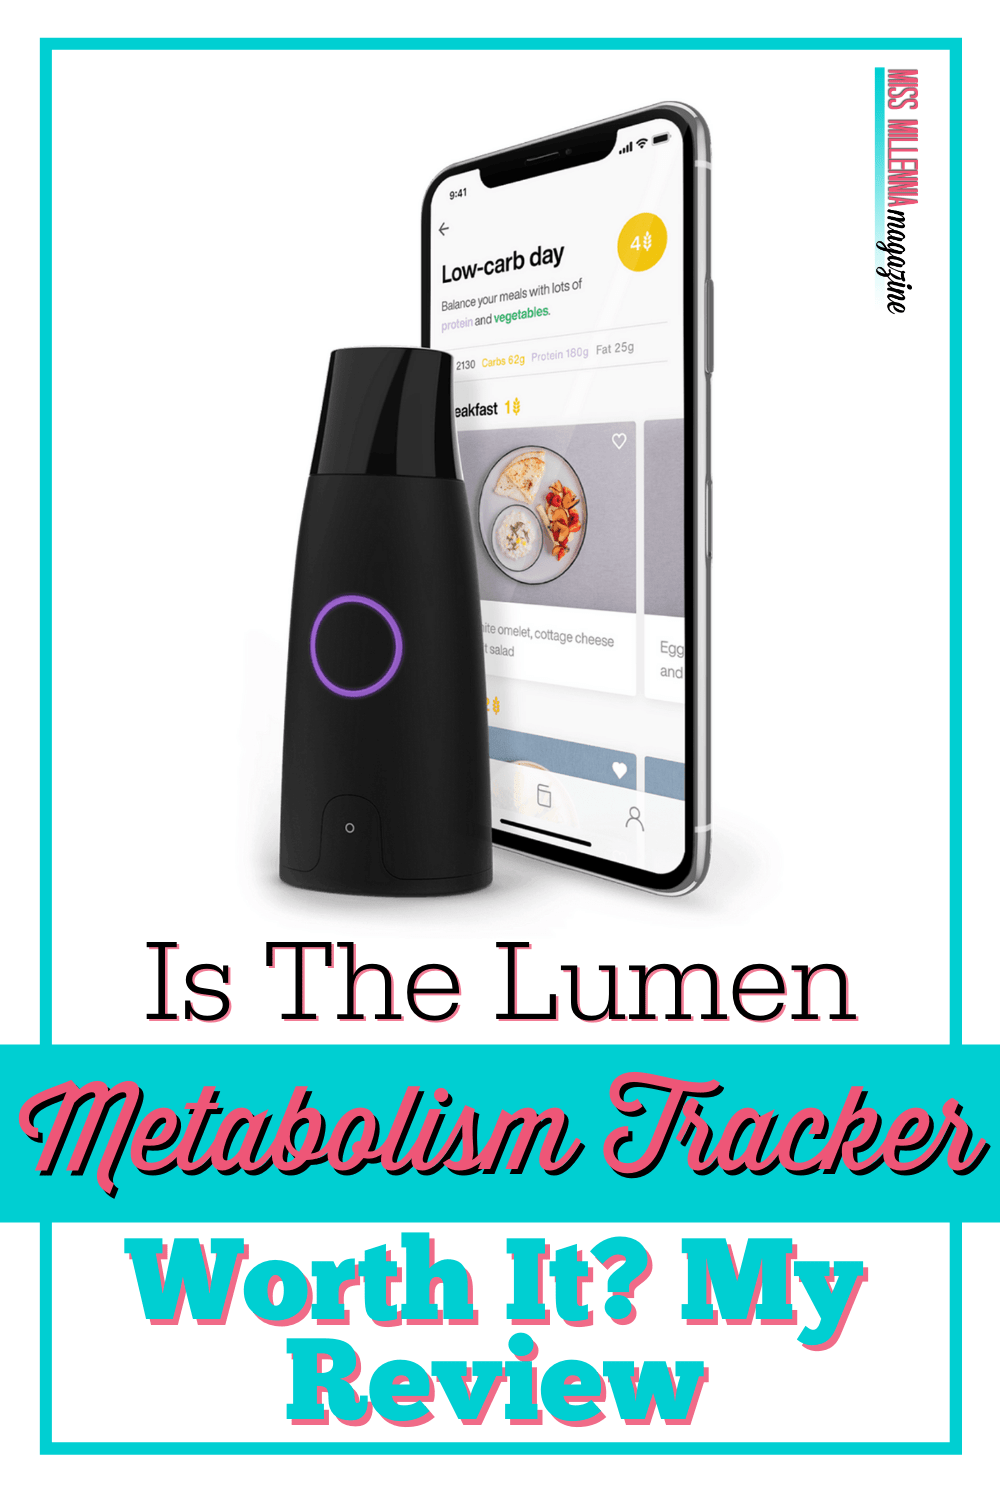 lumen metabolic tracker reviews